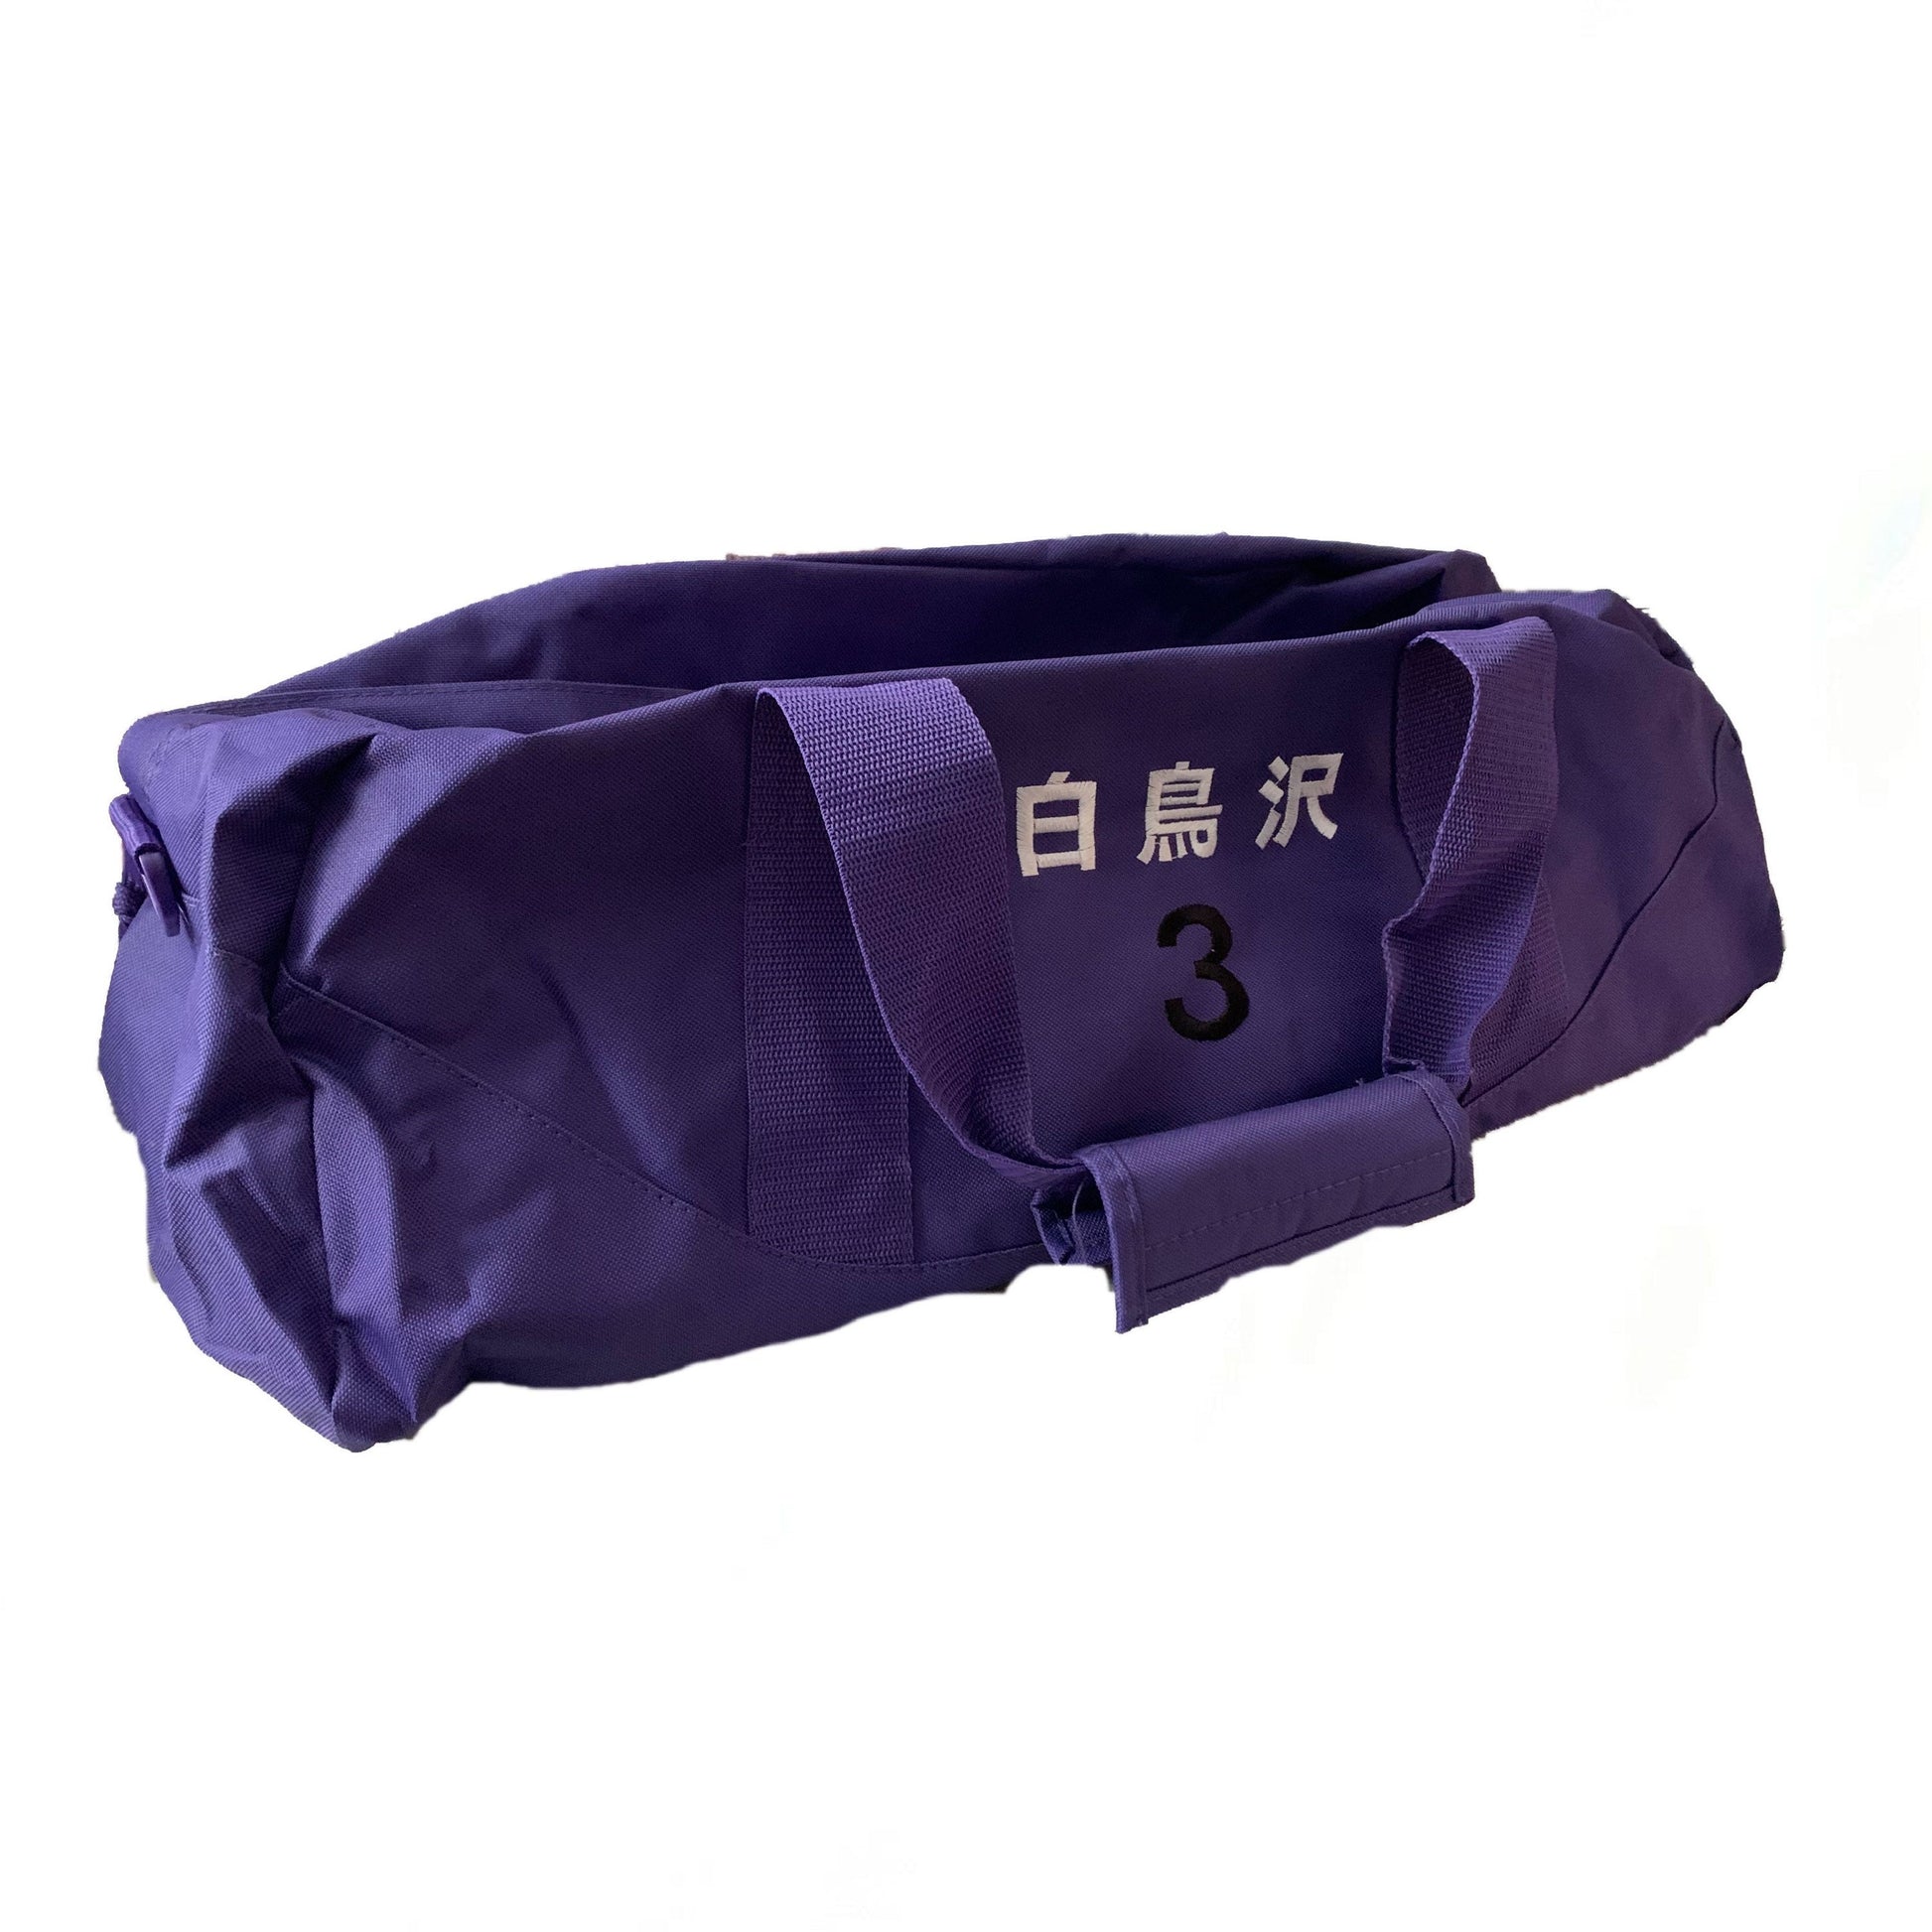 Semi Eita Shiratorizawa Luggage Backpack Gym Bag Duffel Ushijima Tendou Satori